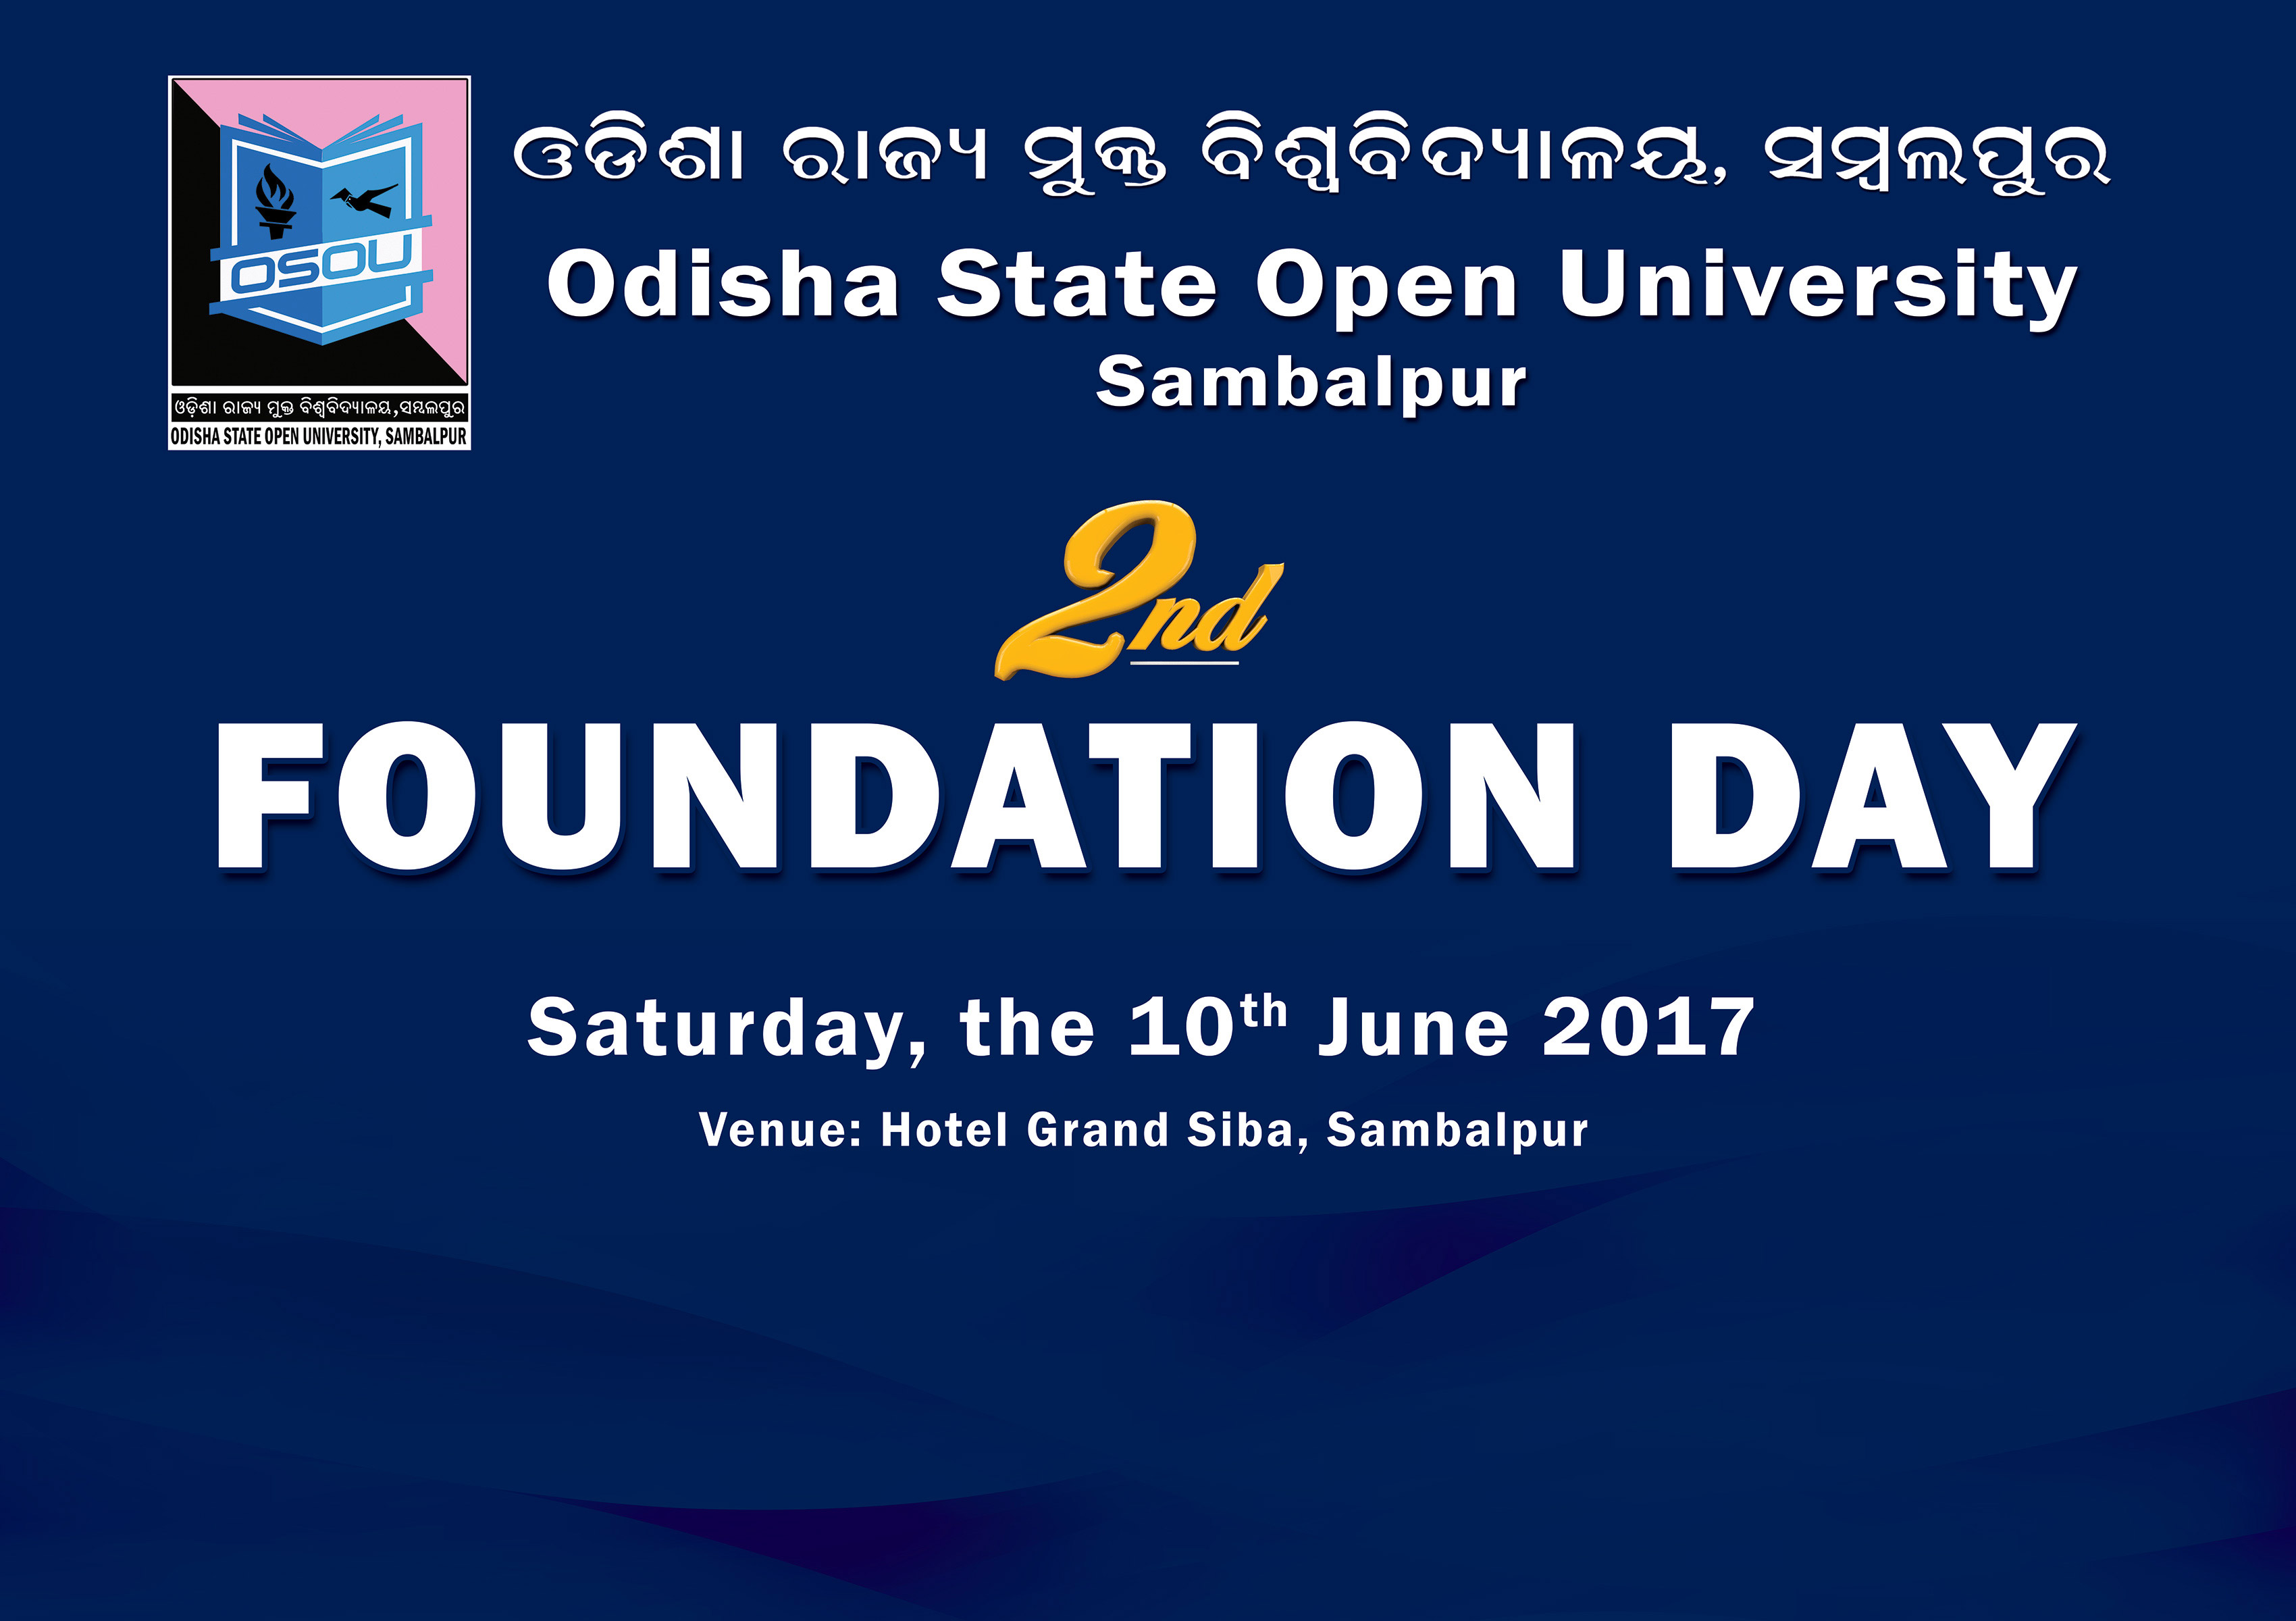 2nd Foundation Day 2017